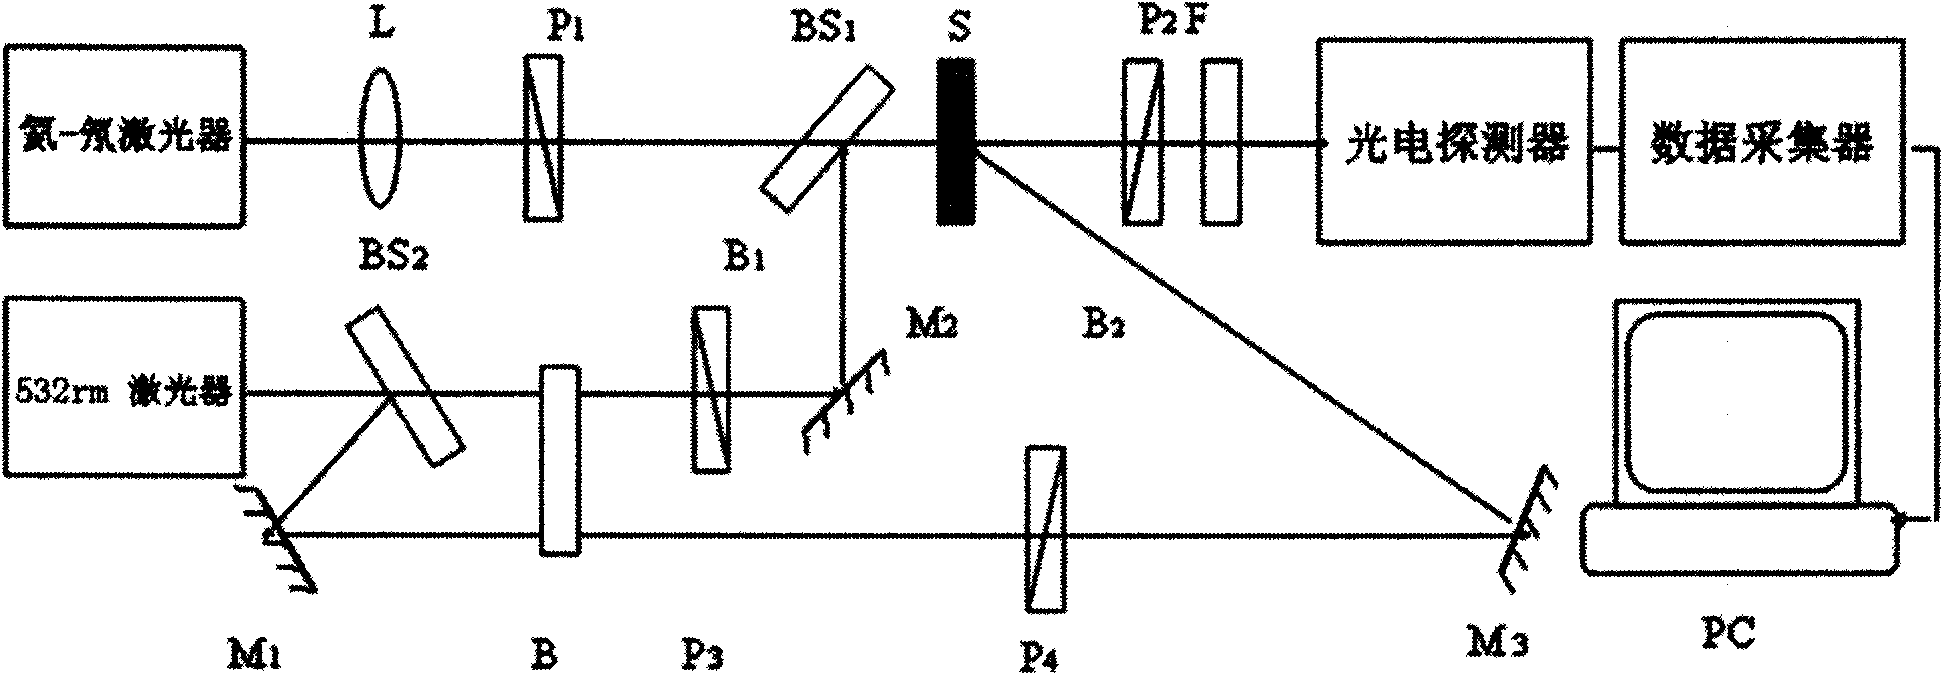 Novel method and model for improving modulation depth of dye doped organic thin film all-optical switch